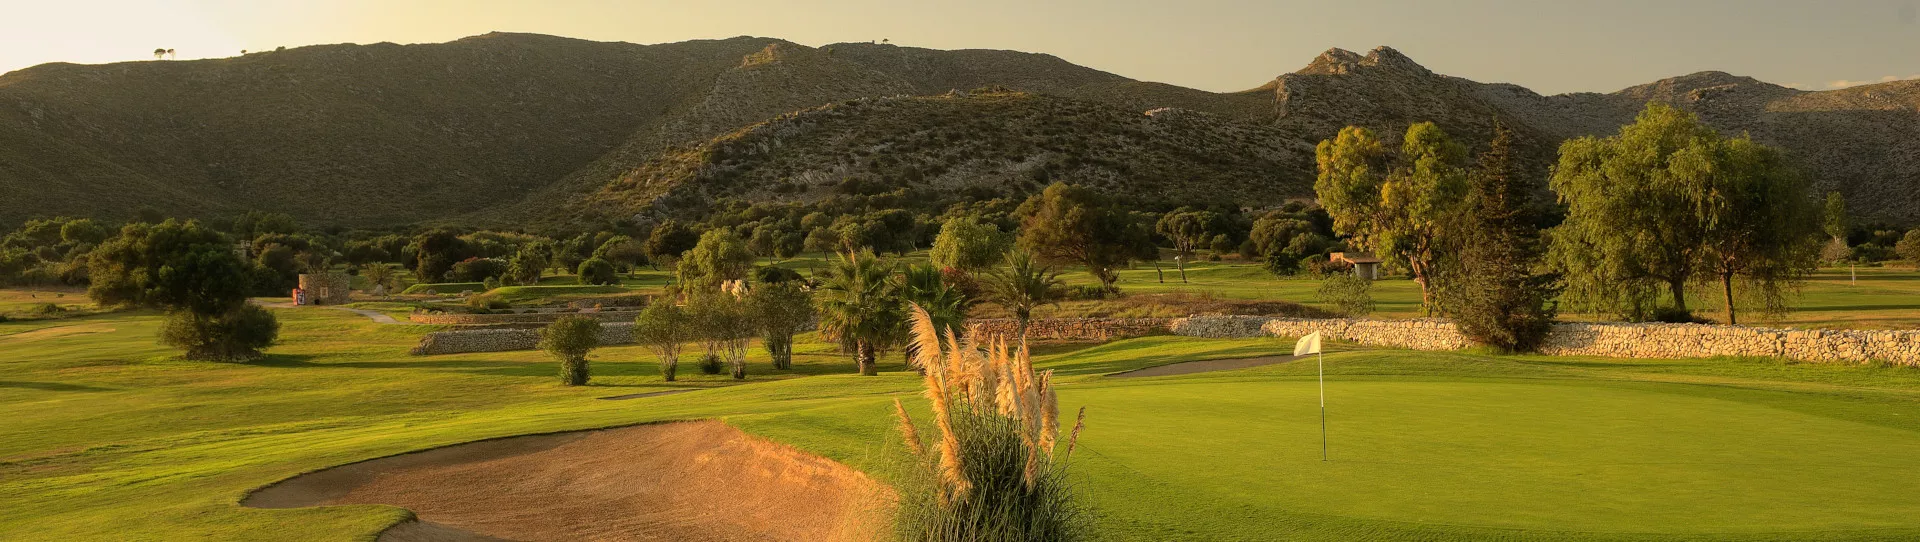 Spain golf holidays - Gem Golf Package - Photo 1